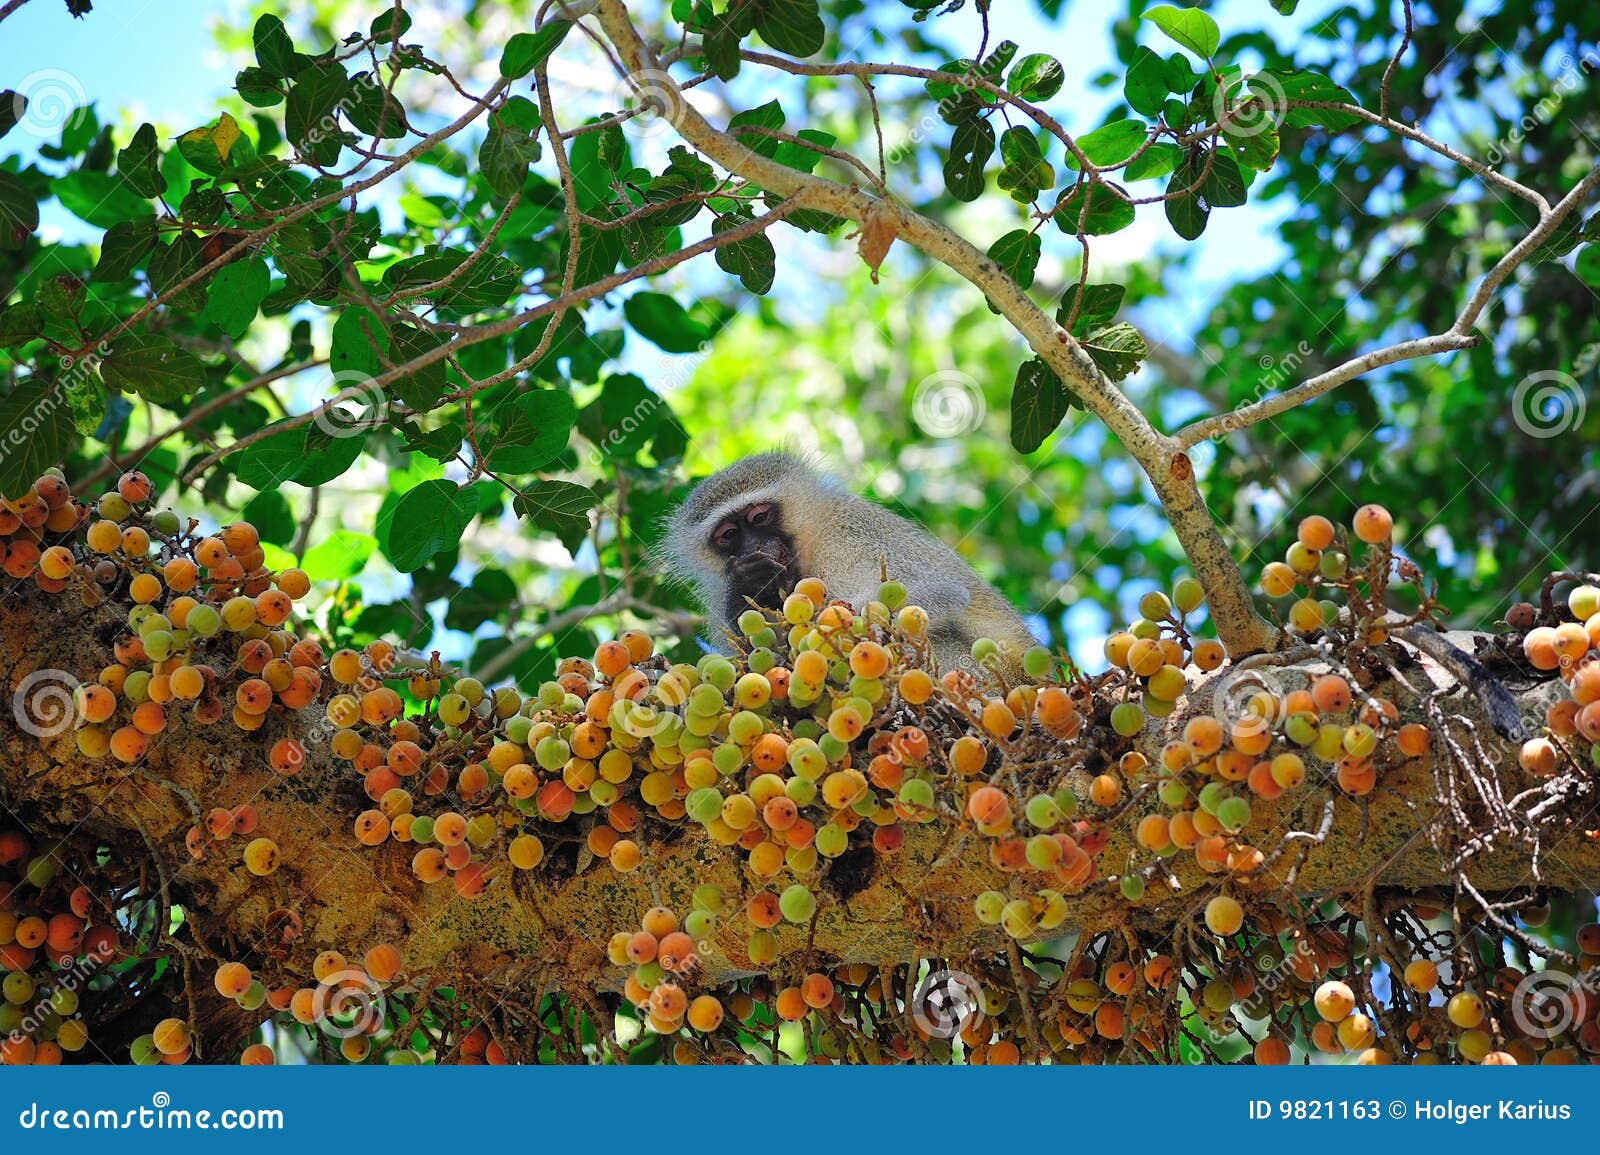 vervet monkey in fig-mulberry tree